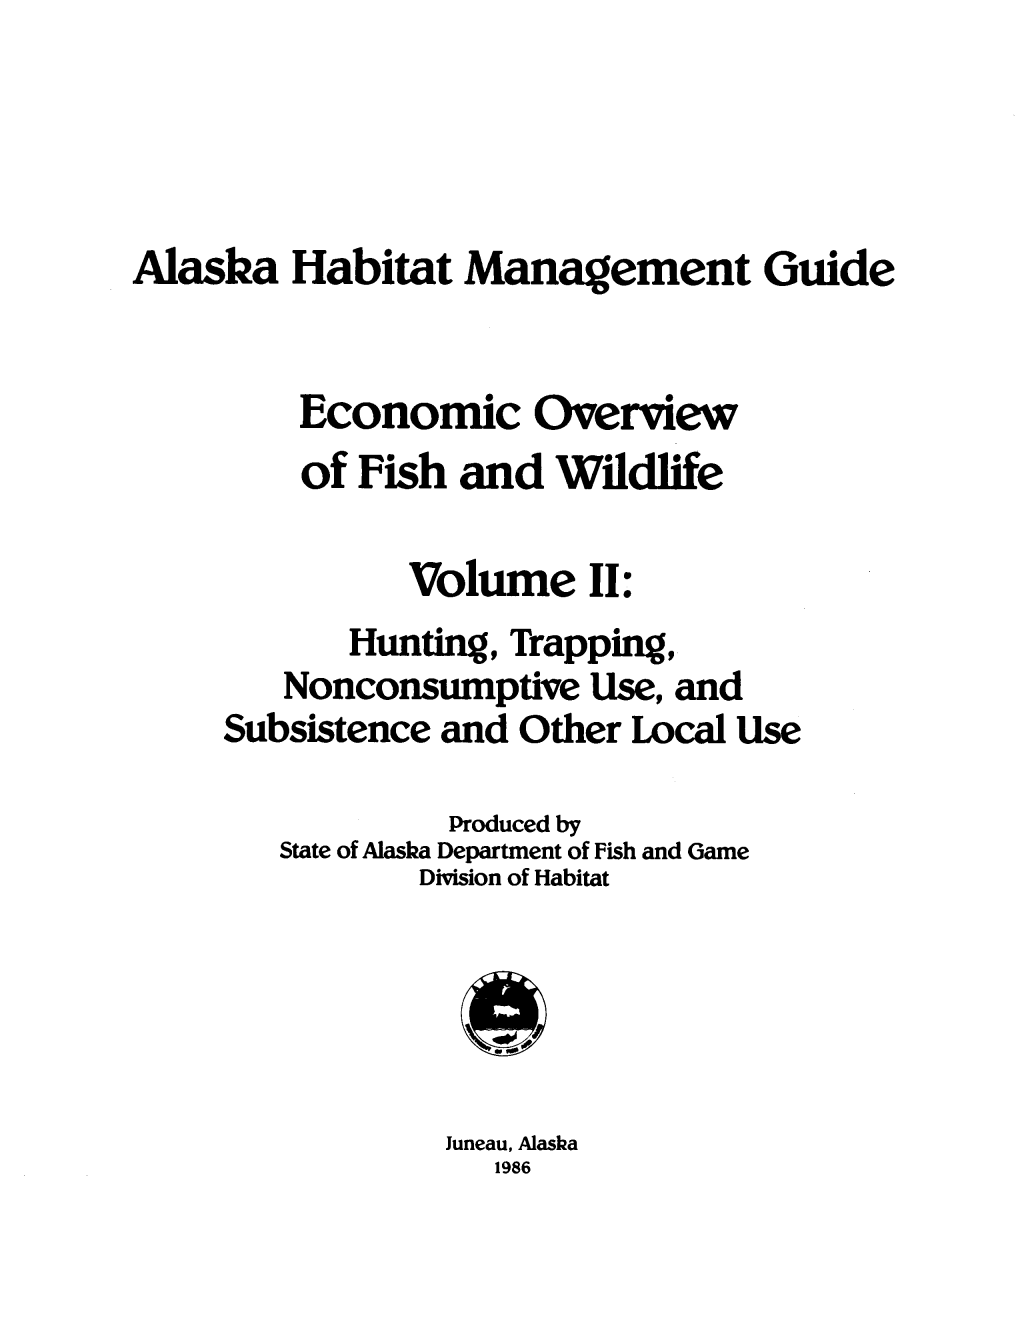 Alaska Habitat Management Guide. Economic Overview of Fish